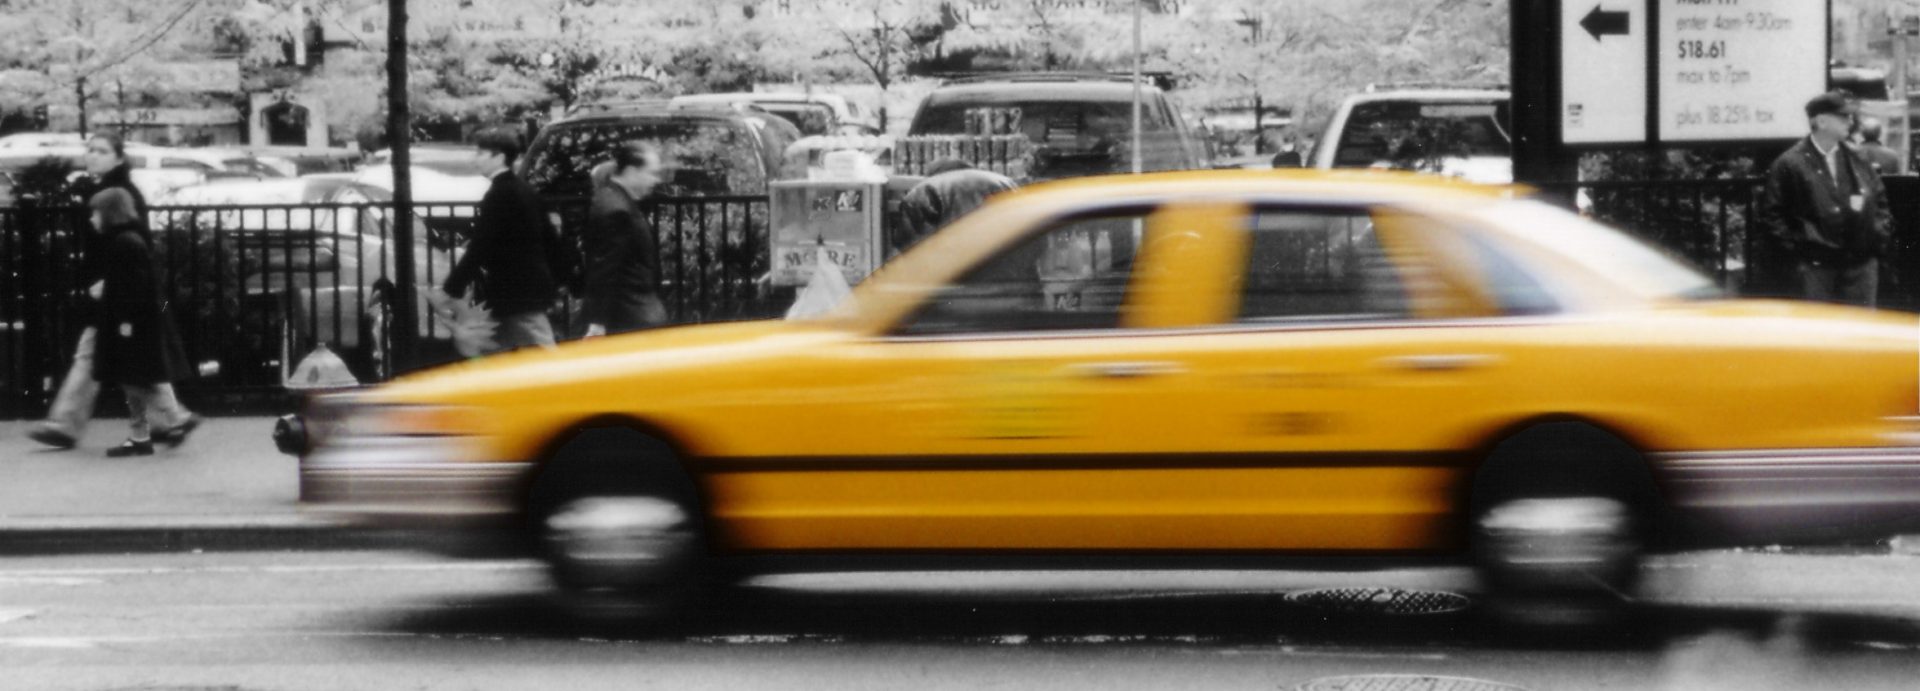 thirty5 - Taxi Cab